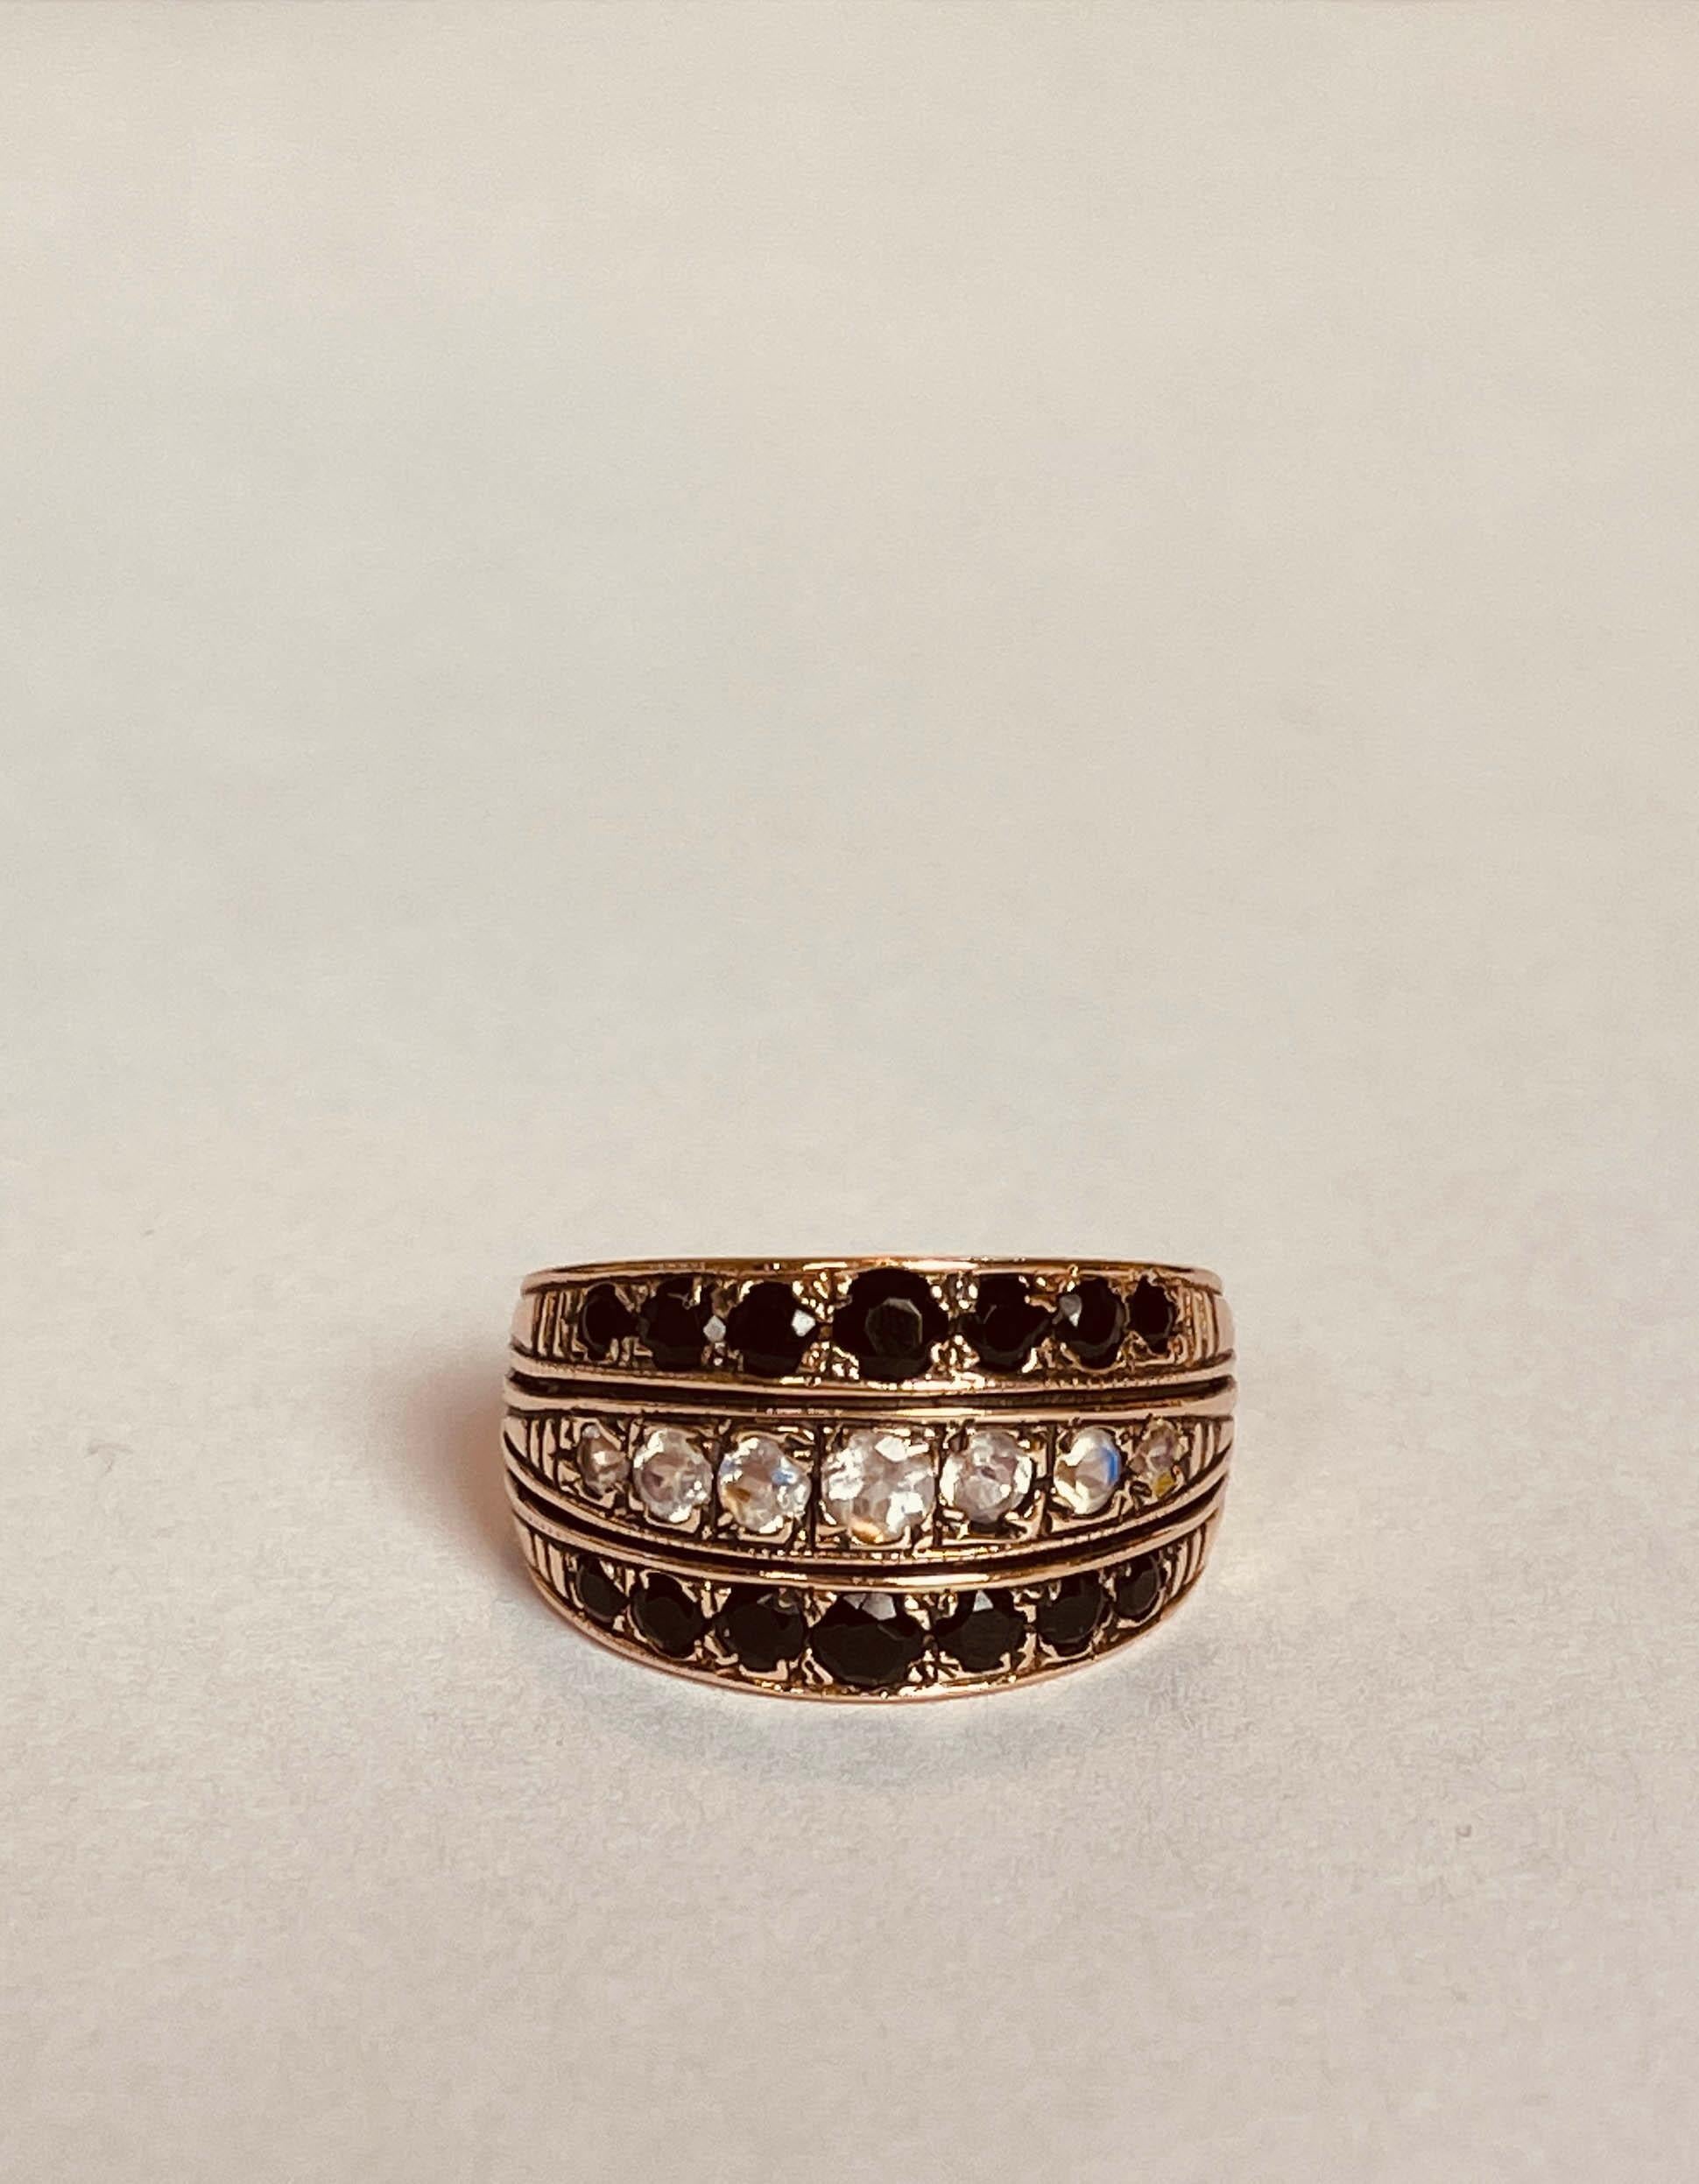 Arik Kastan 14K Rose Gold Moonstone & Black Onyx Ring
Materials: 14K Gold, moonstone, onyx
Hallmarks: 14K
Closure/Opening: Slide on
Overall Condition: Excellent

Estimated Retail: $800+ Size: 6.5
Width: .5 